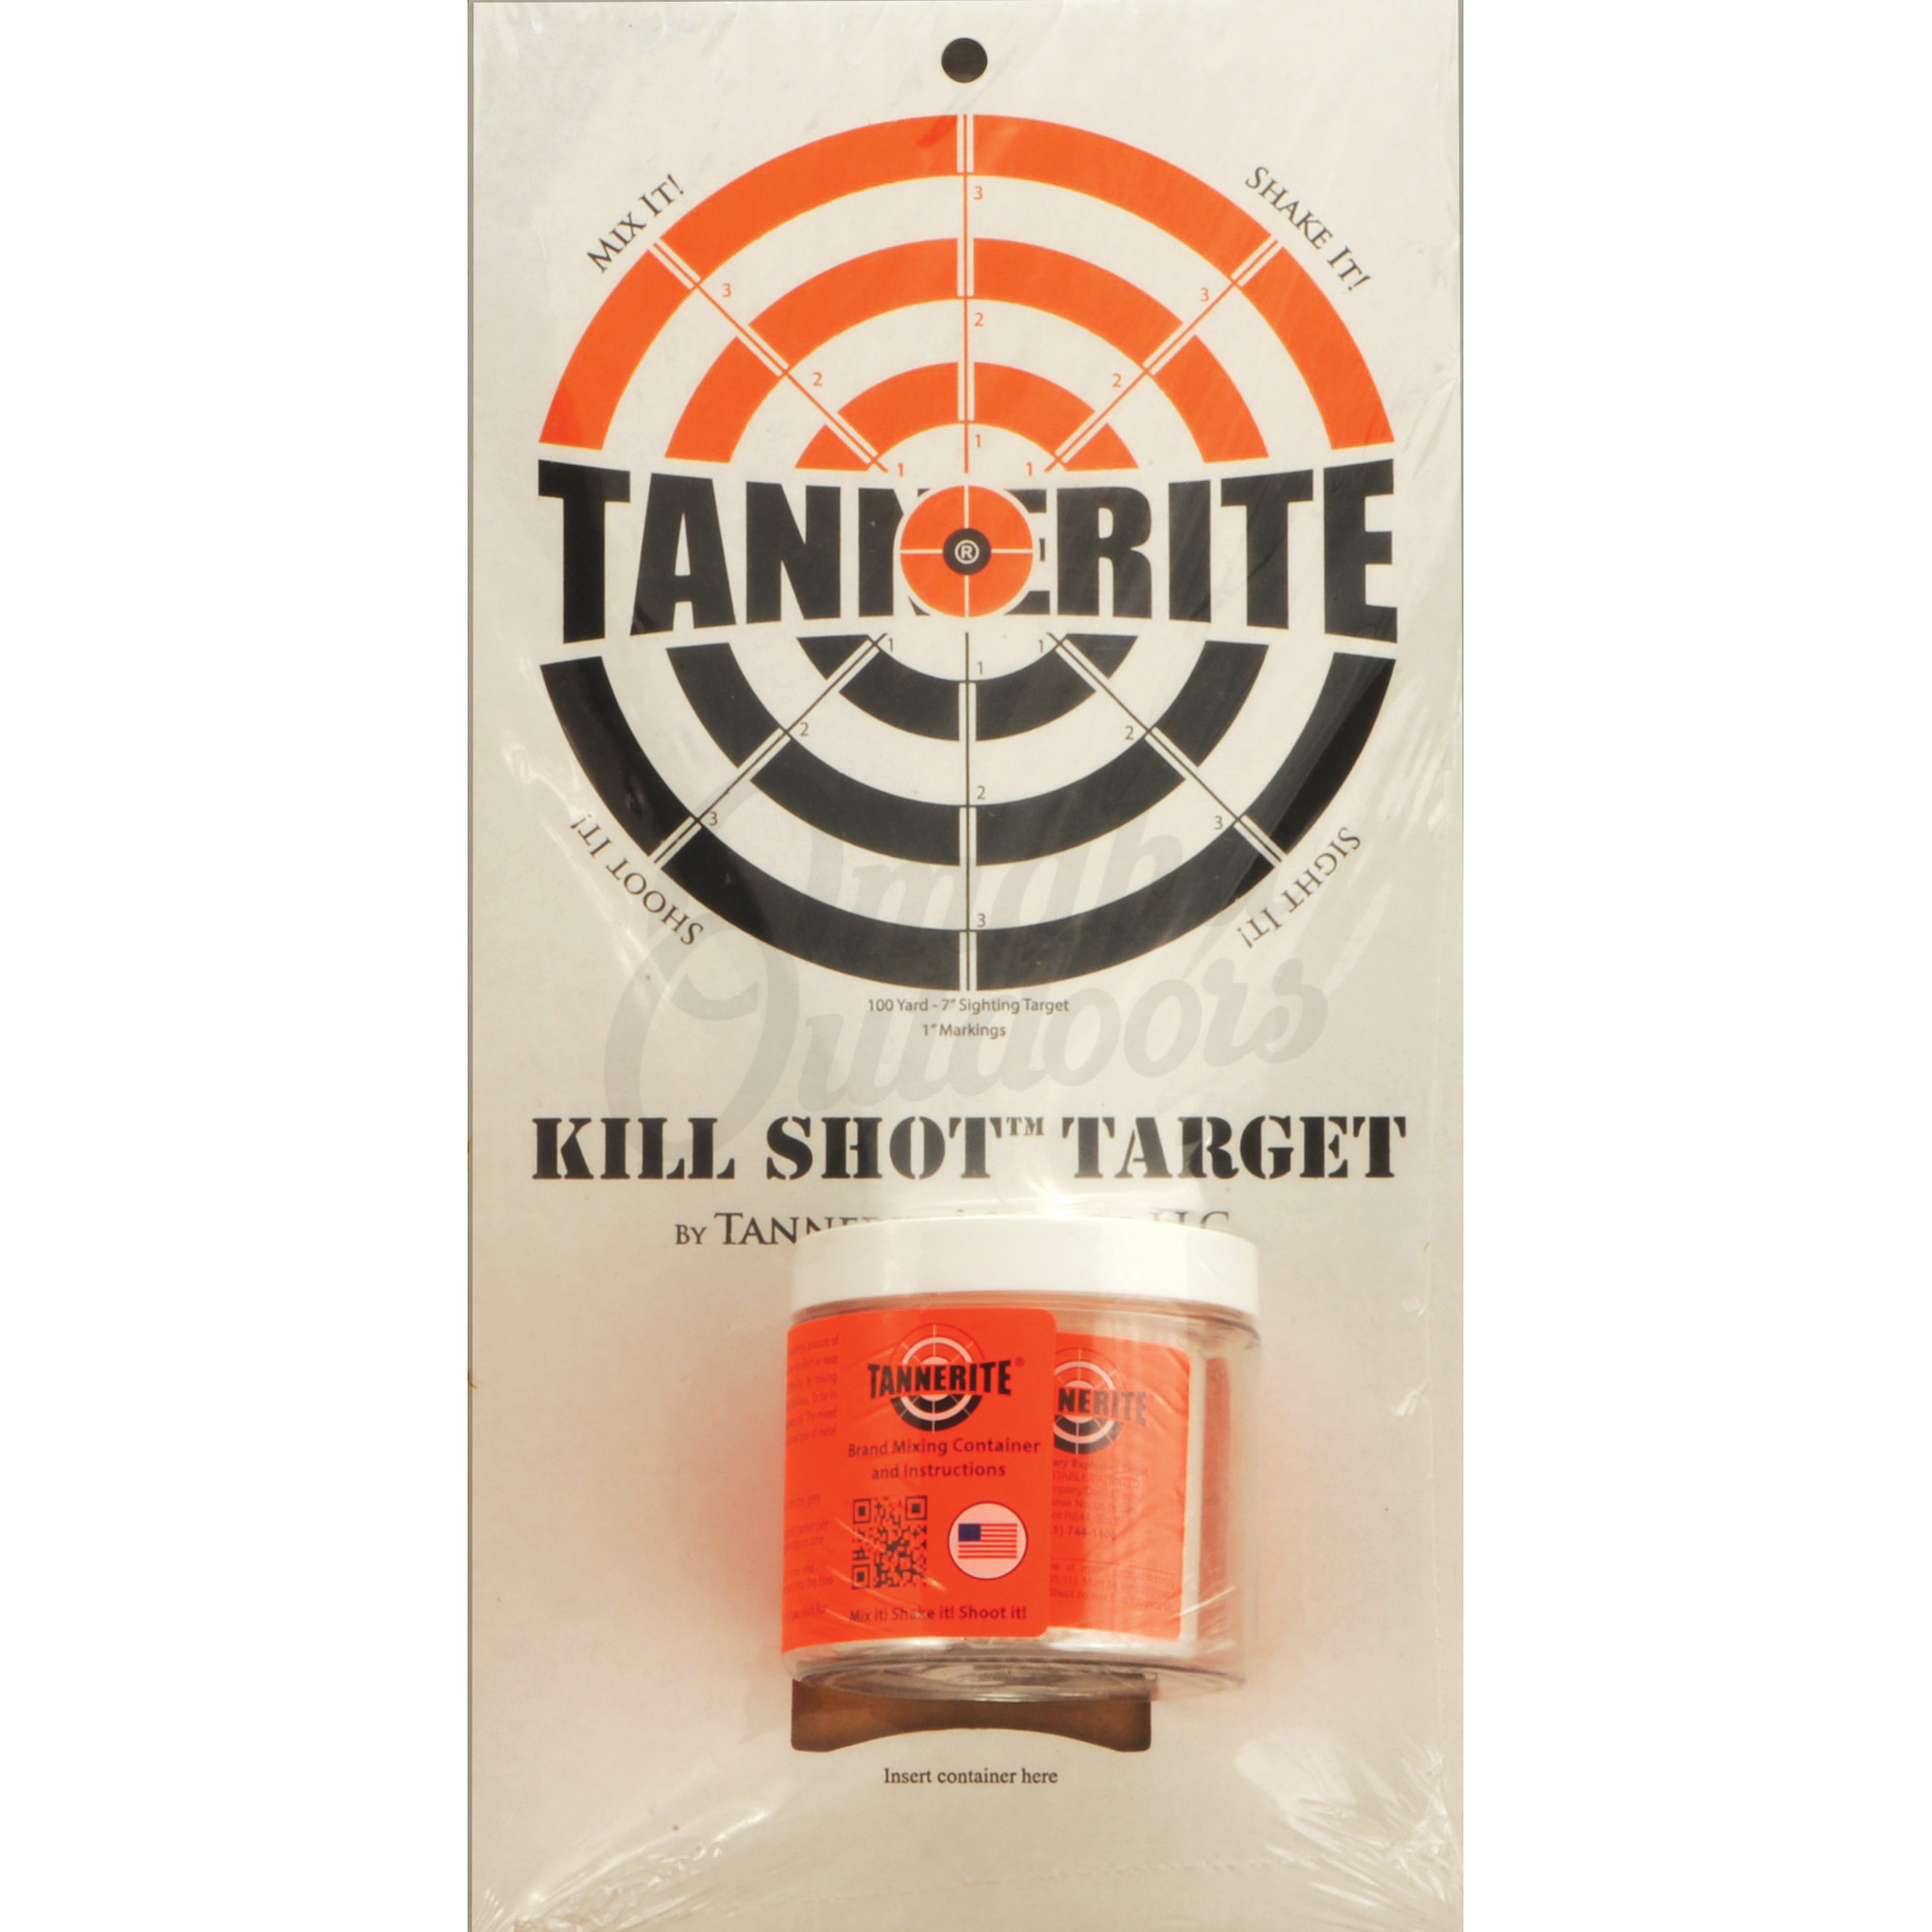 Tannerite 6 Pack 2lb Targets Brick